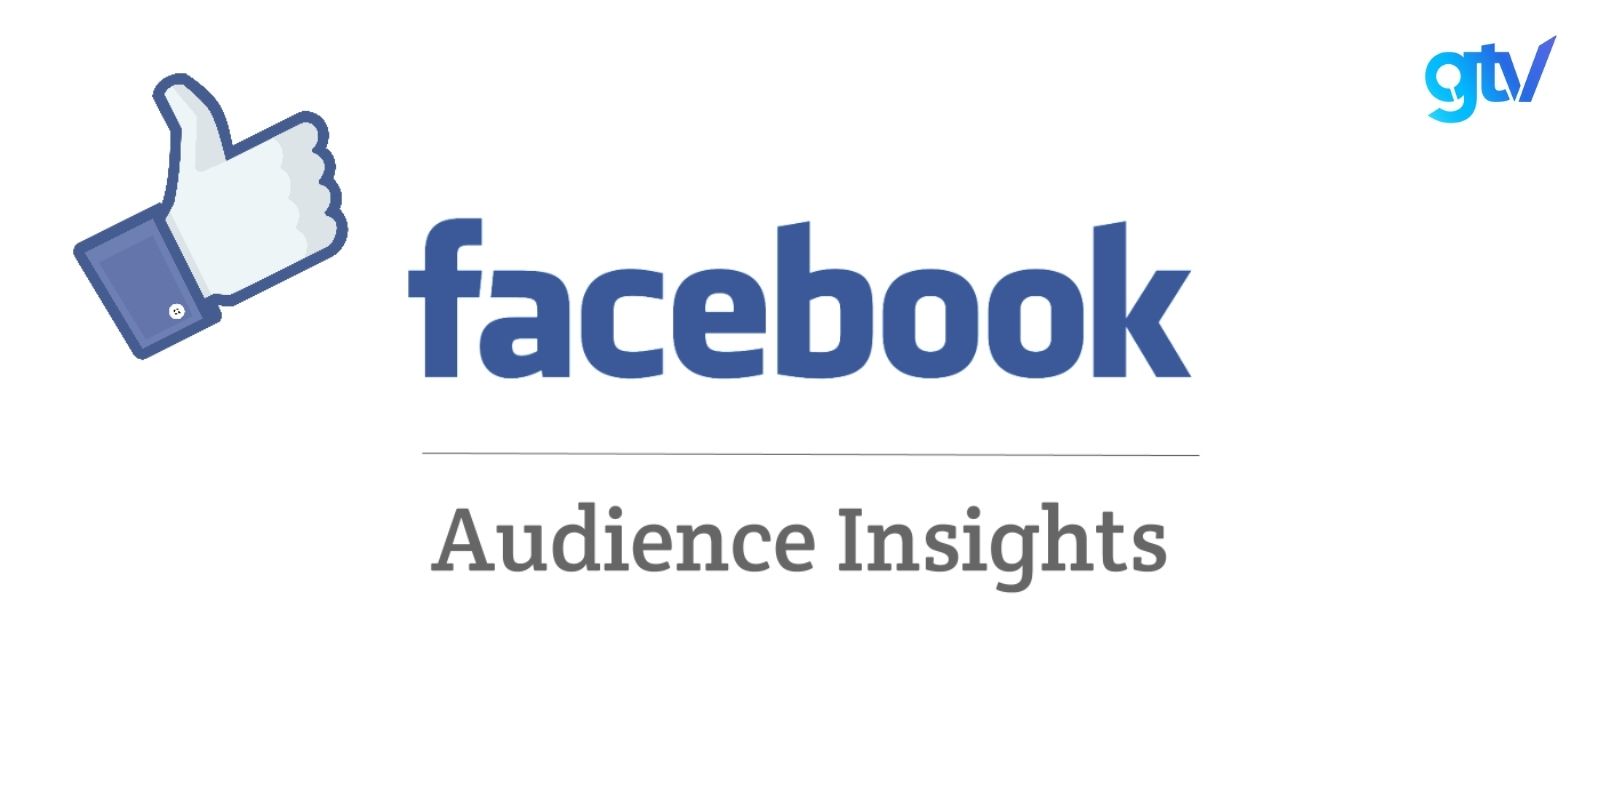 Sử dụng phần mềm Facebook Audience Insights